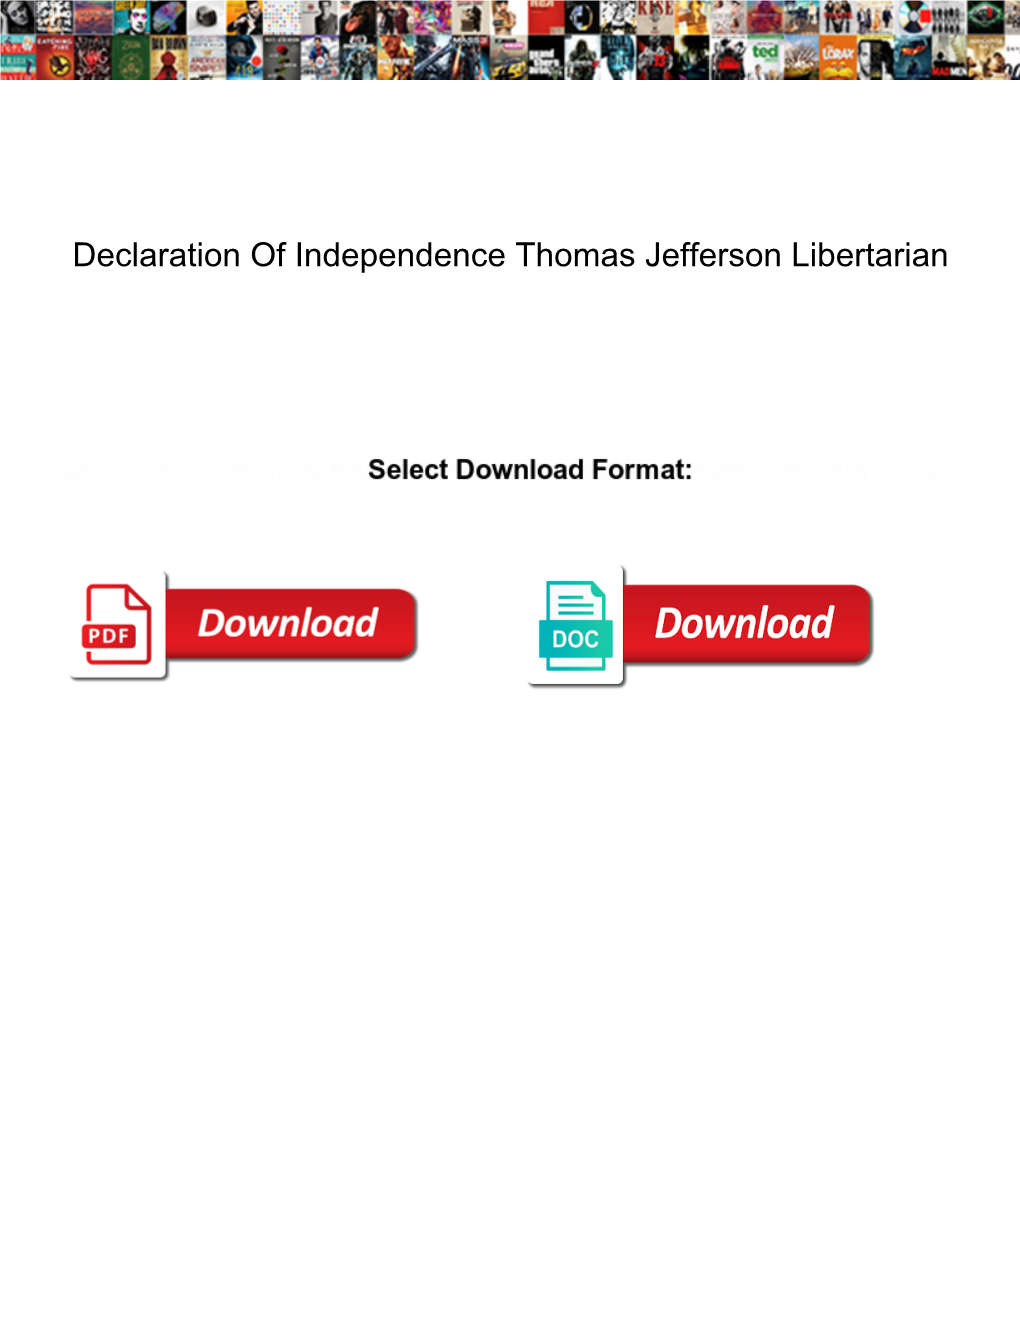 Declaration of Independence Thomas Jefferson Libertarian